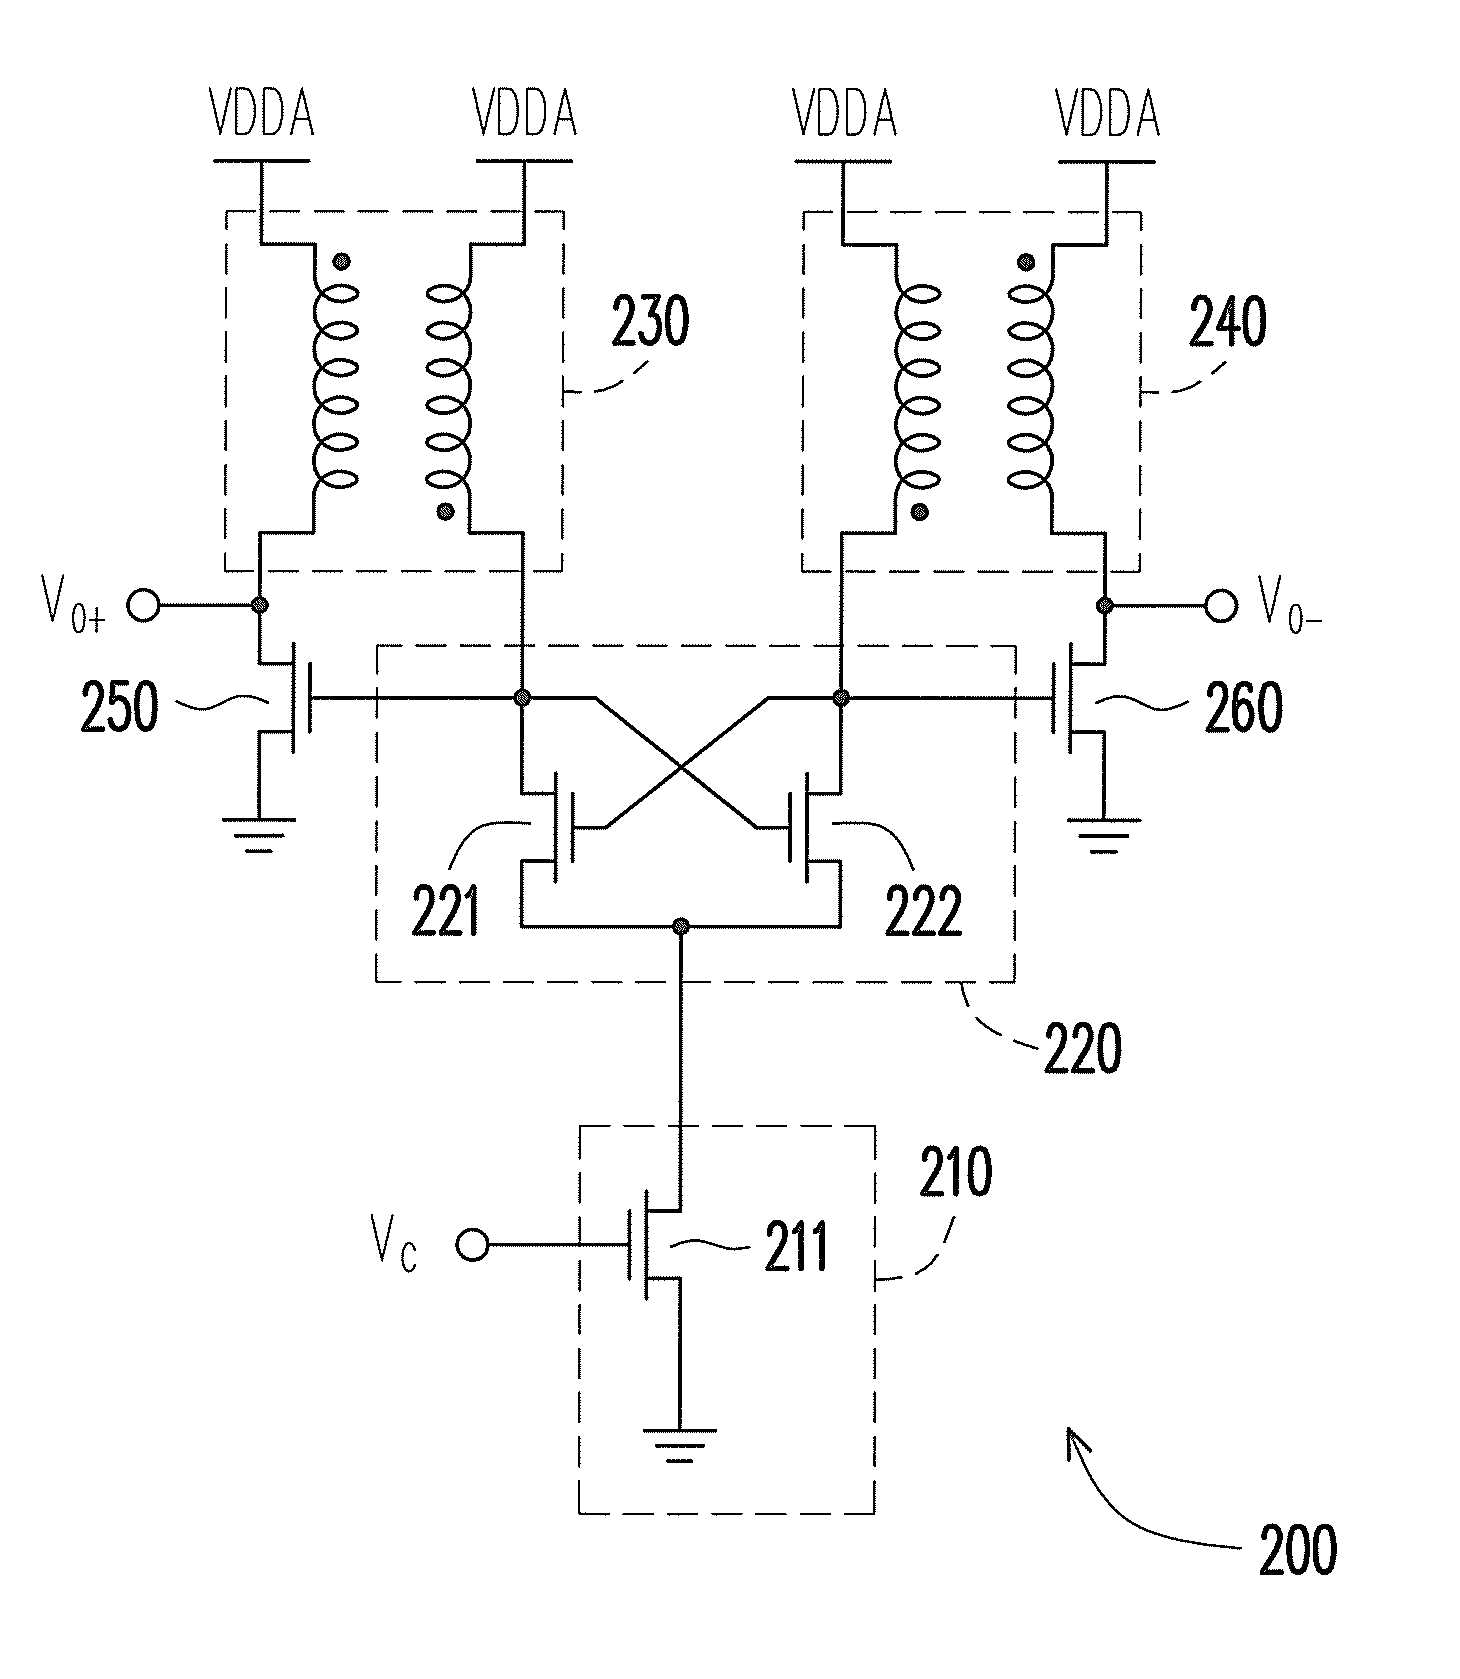 Voltage controlled oscillator